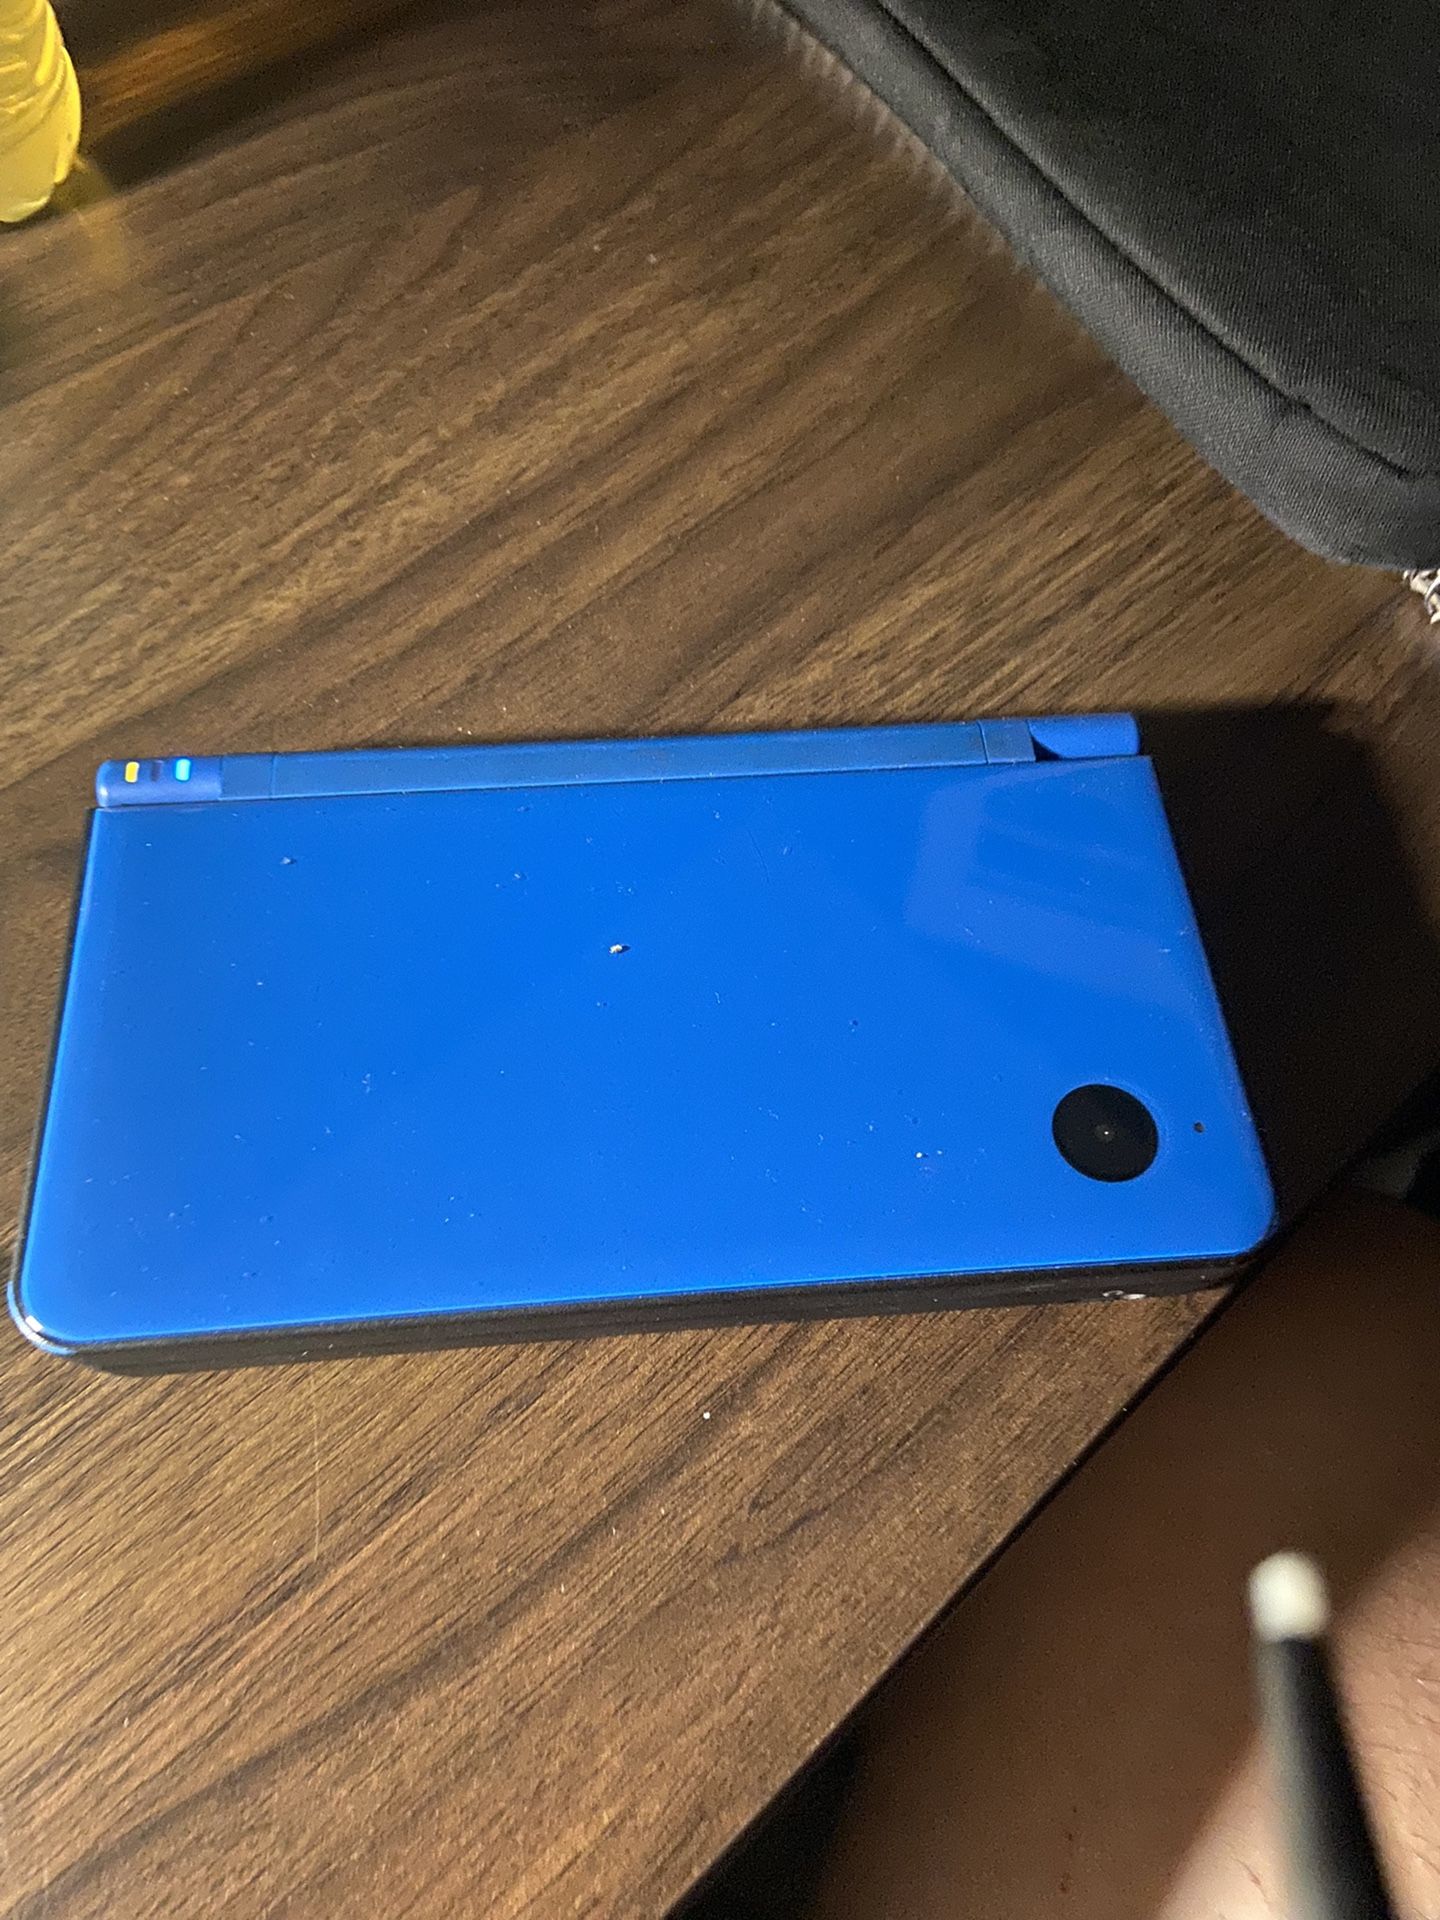 Blue DSi Handheld Game System 